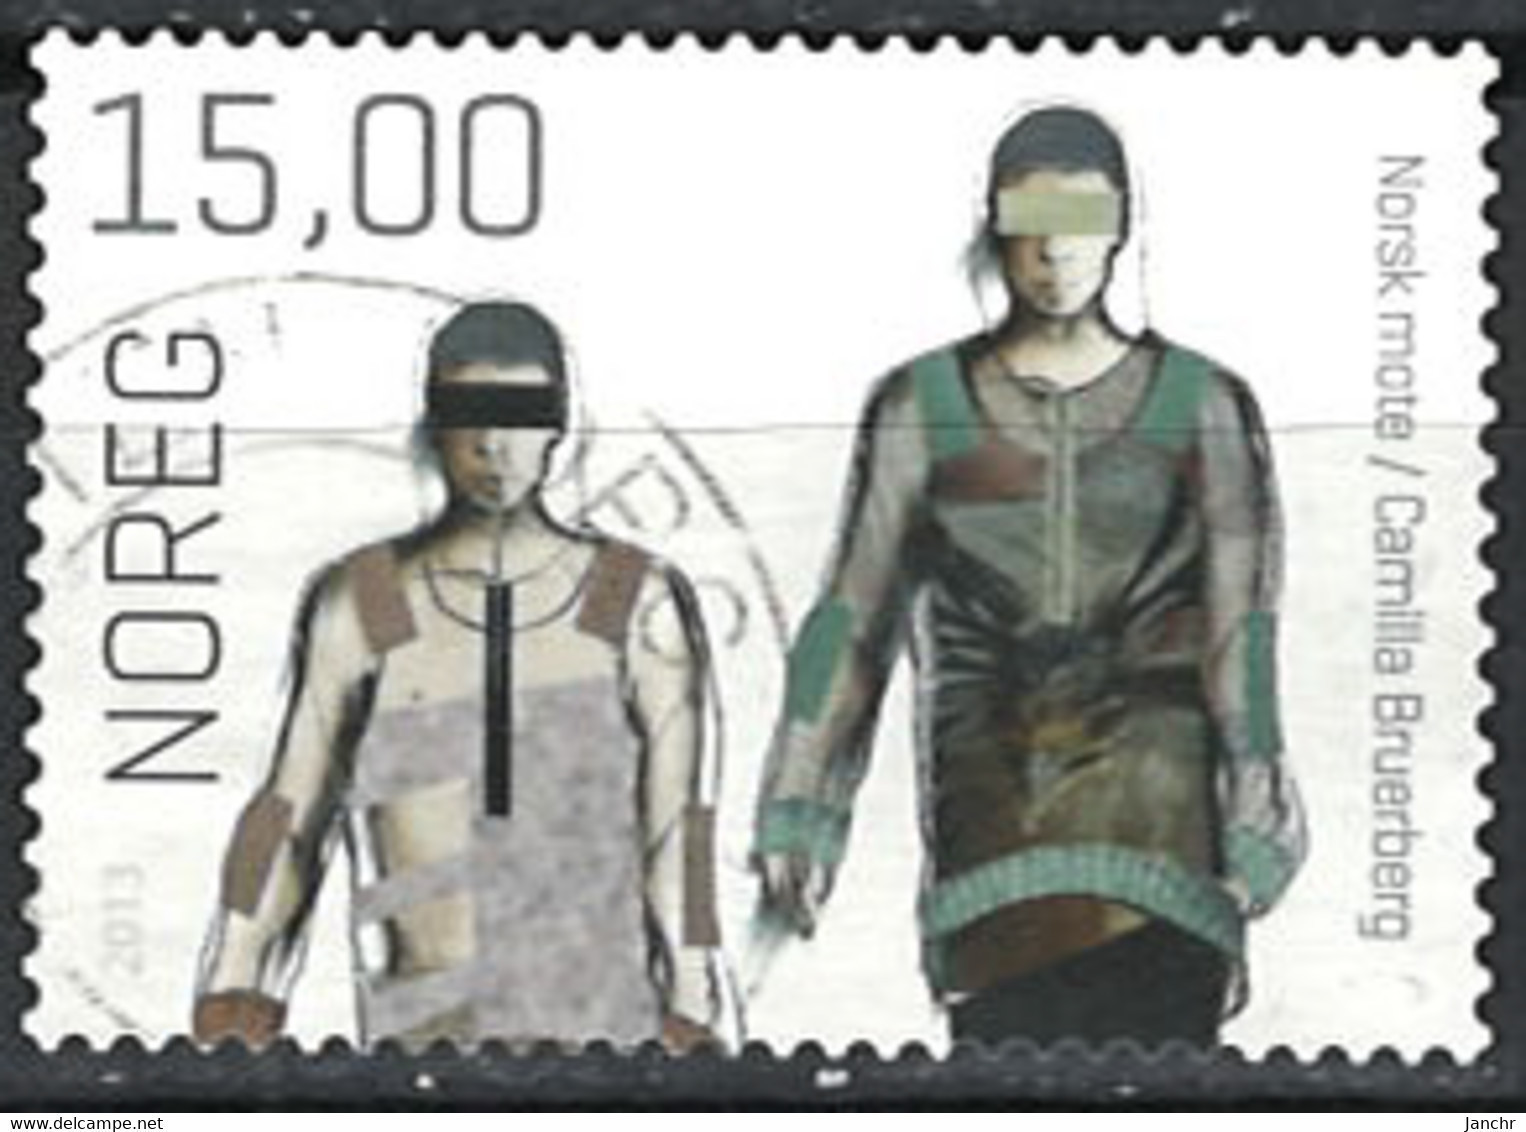 Norwegen Norway 2013. Mi.Nr. 1803, Used O - Used Stamps